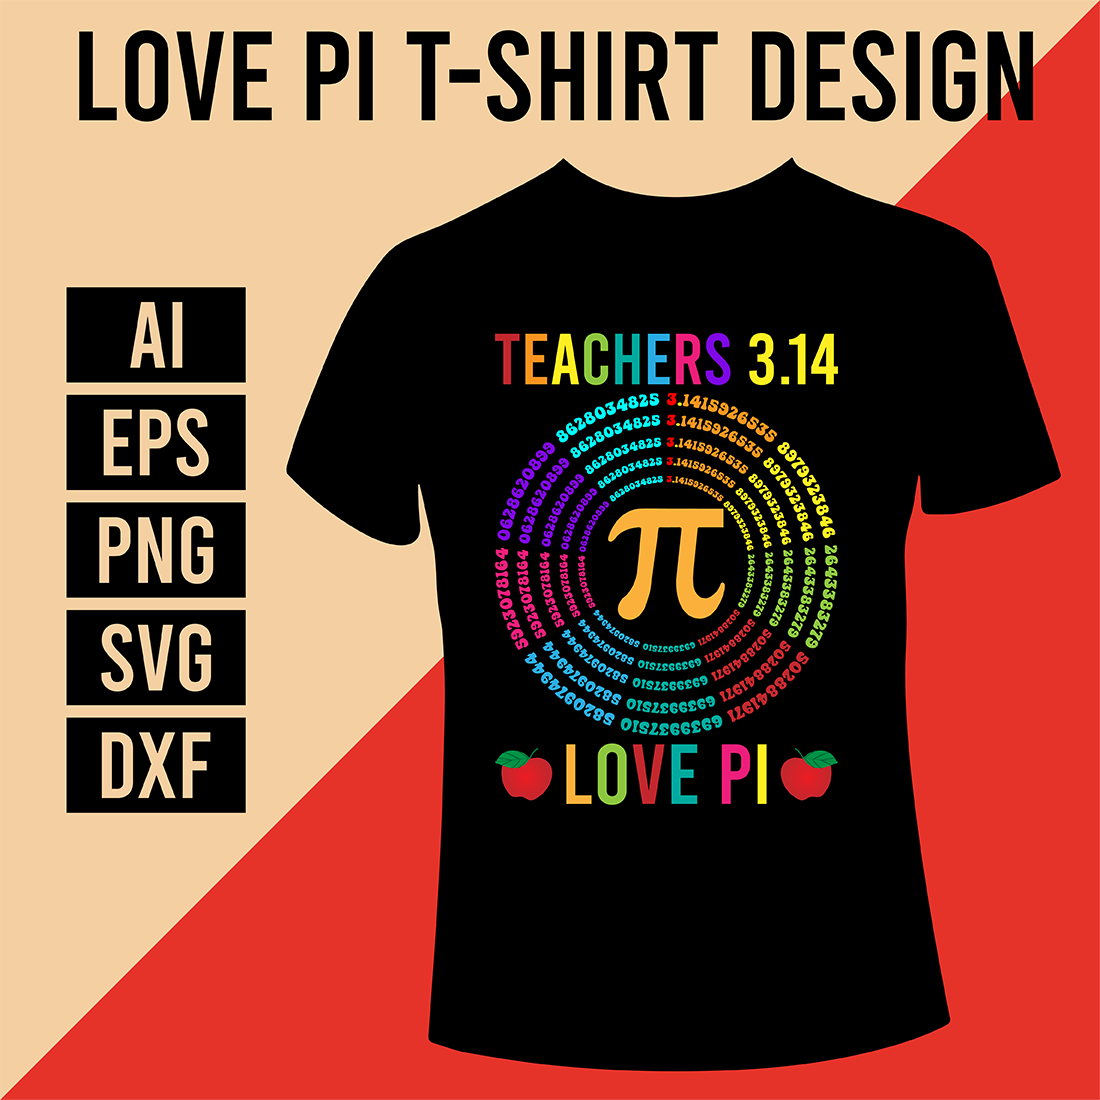 Love Pi T-Shirt Design cover image.